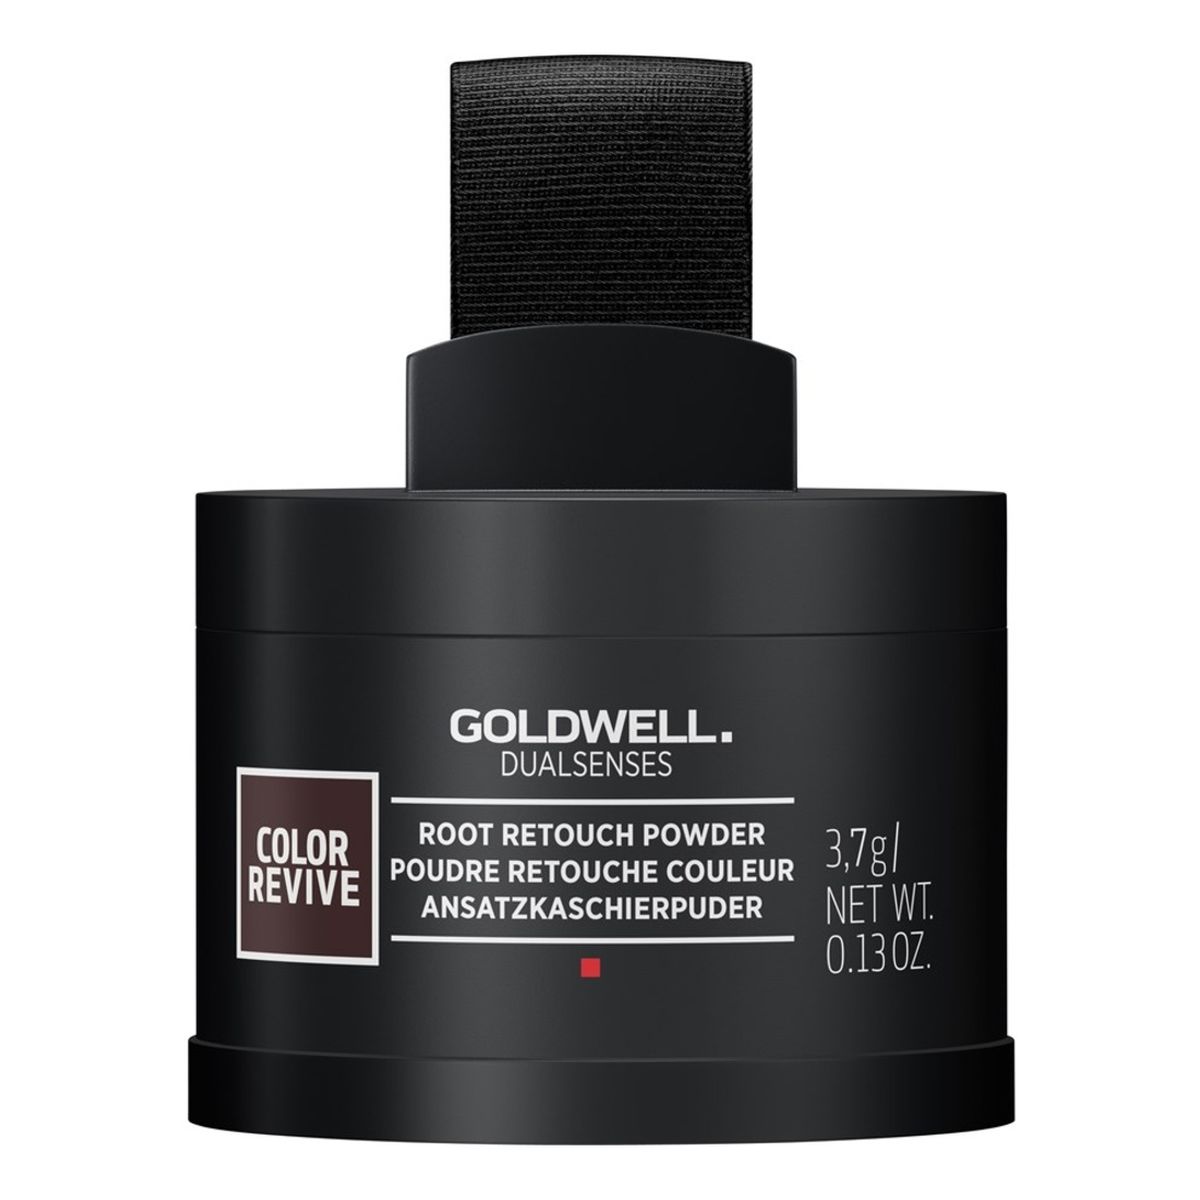 Goldwell Dualsenses Colour Revive Root Retouch Powder puder maskujący odrost 3g